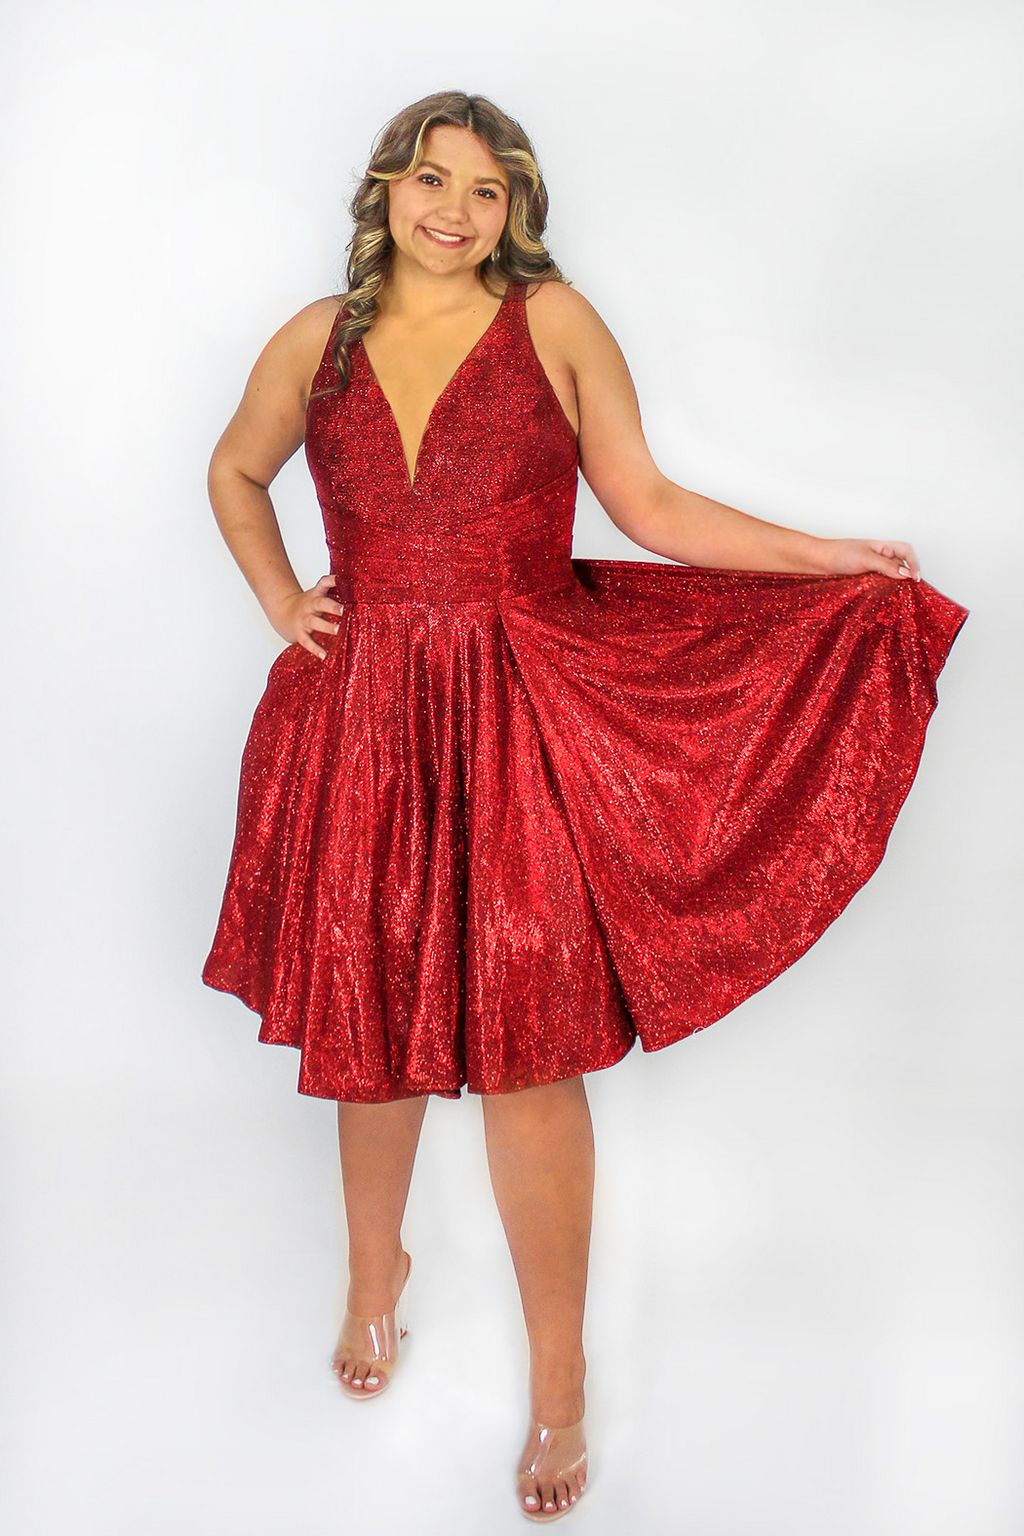 Plus Size Dresses Plus Size Short Sleeveless Homecoming Dress Red